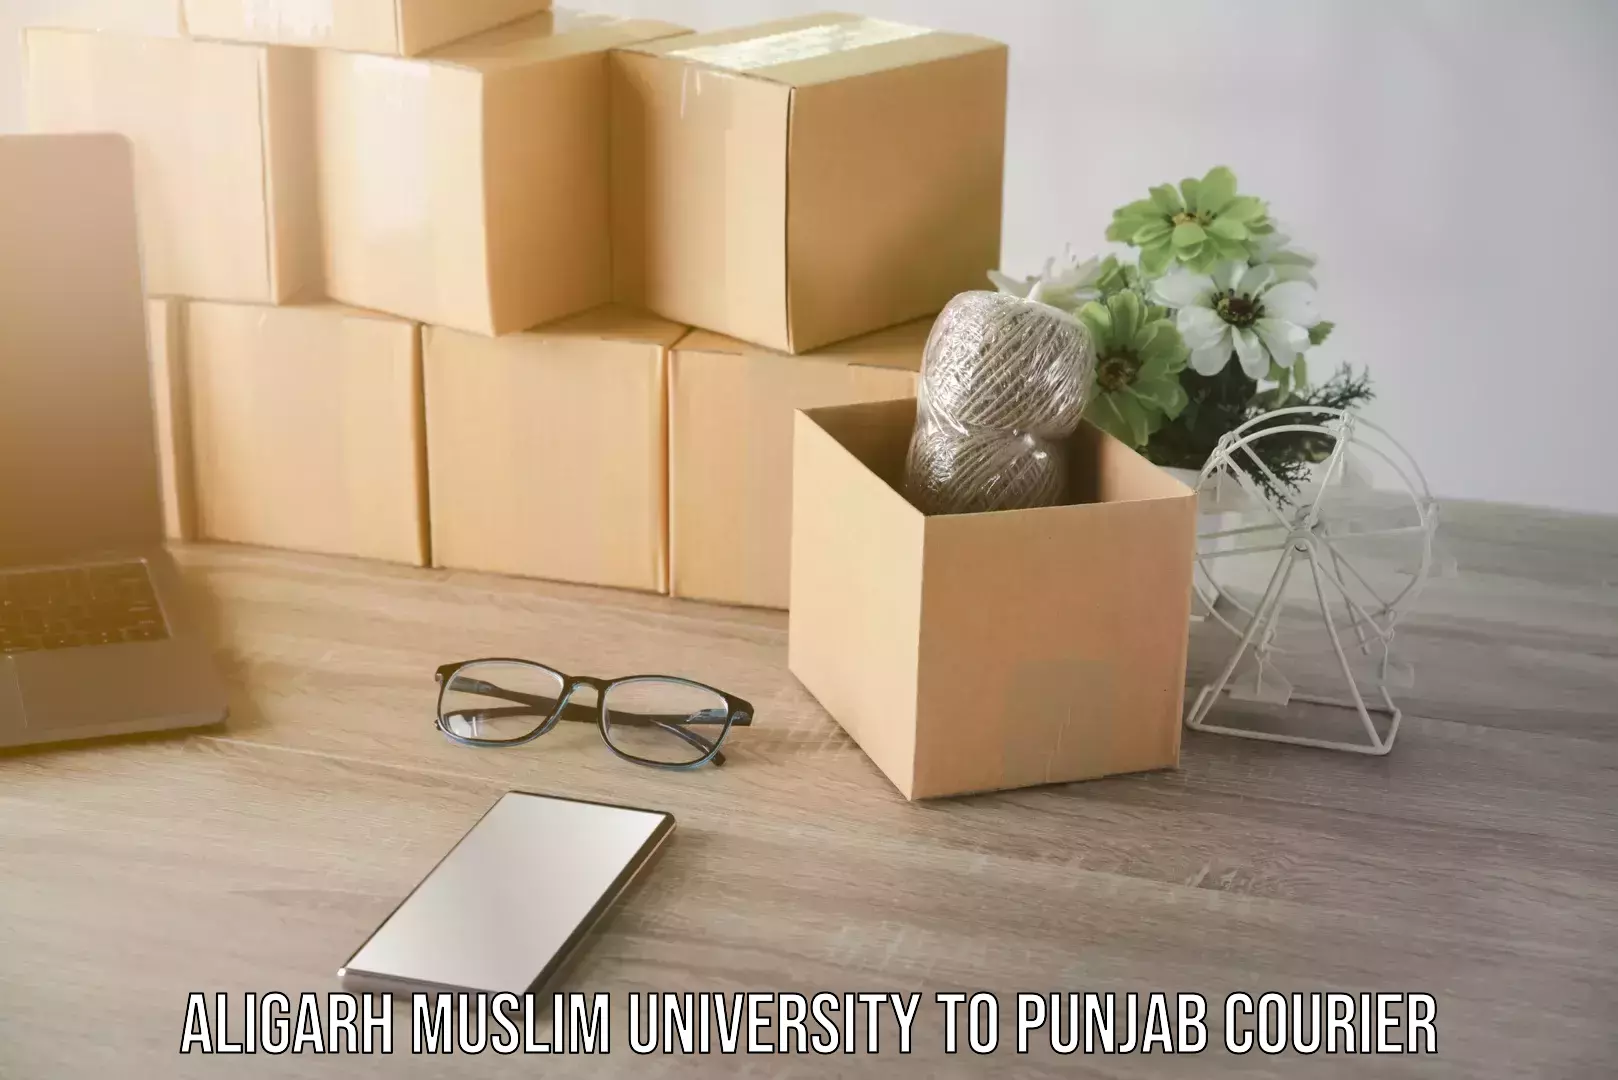 On-call courier service Aligarh Muslim University to Punjab